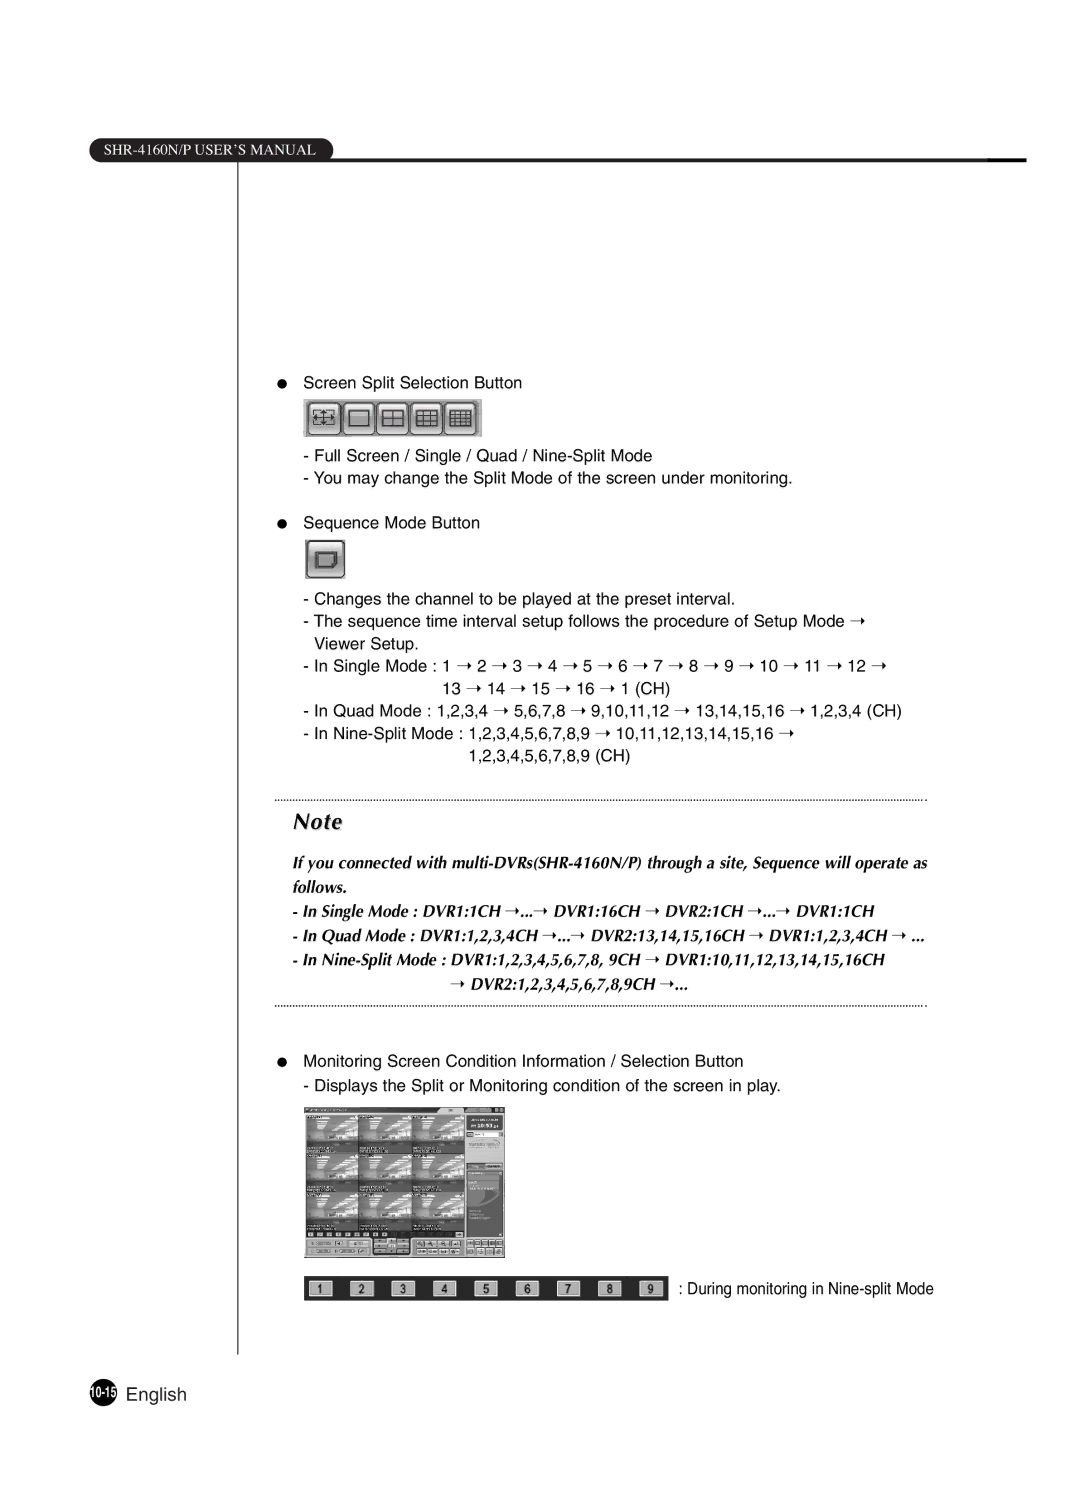 Samsung SHR-4160P manual 10-15English 